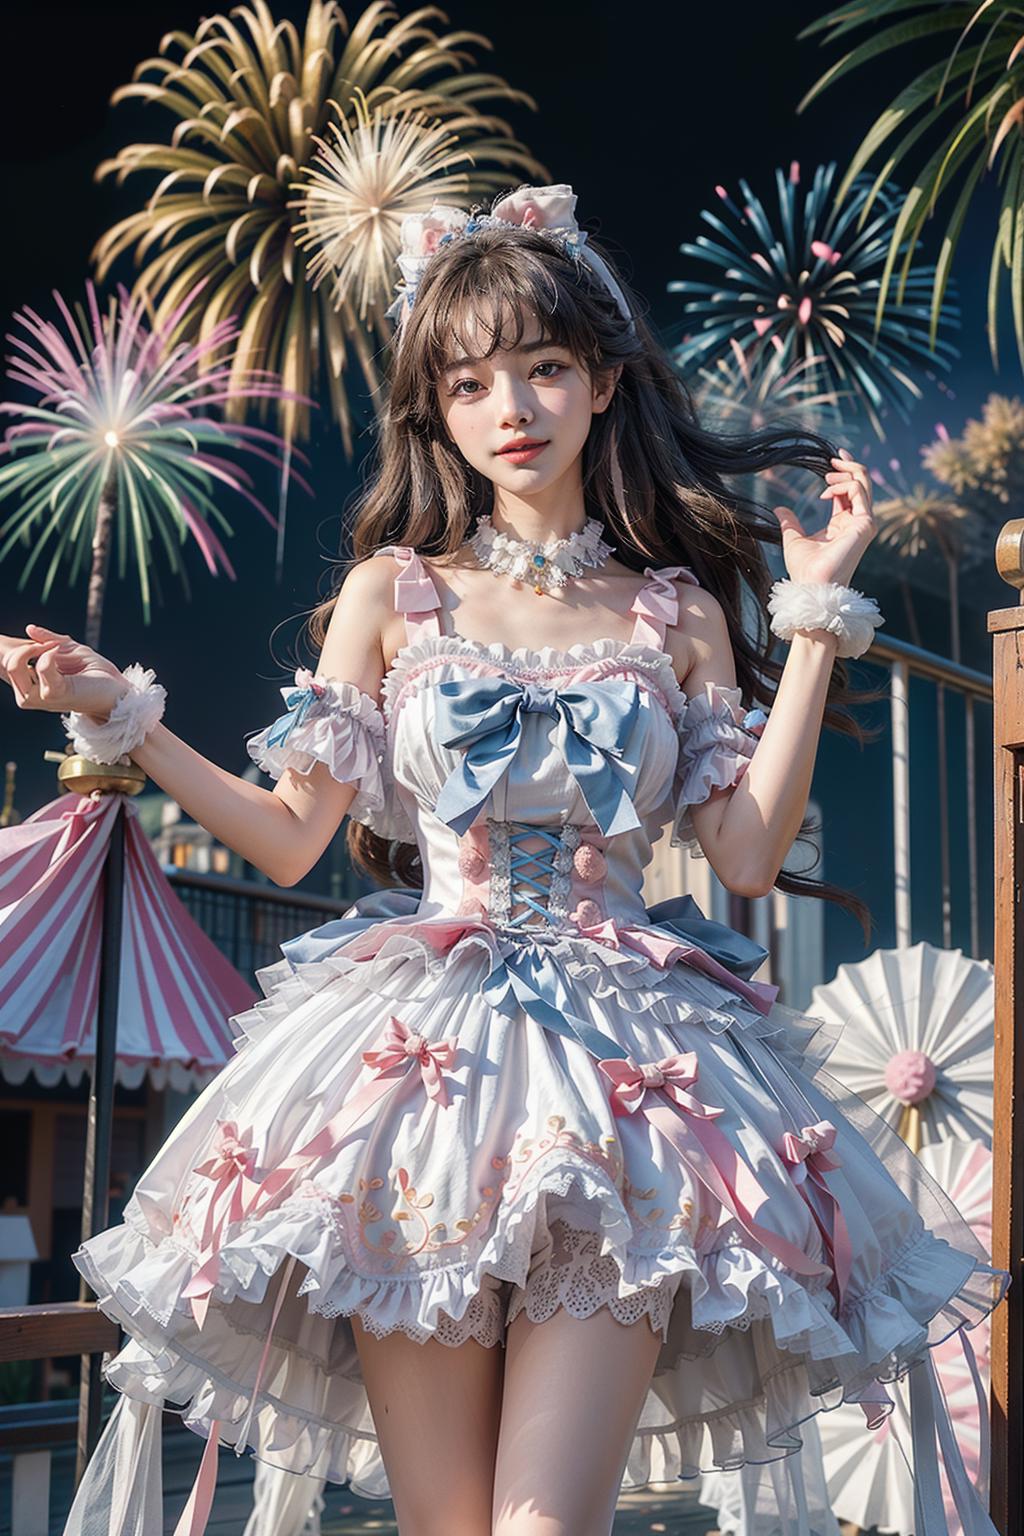 Sweet style dress | 甜美风裙子 image by aboo